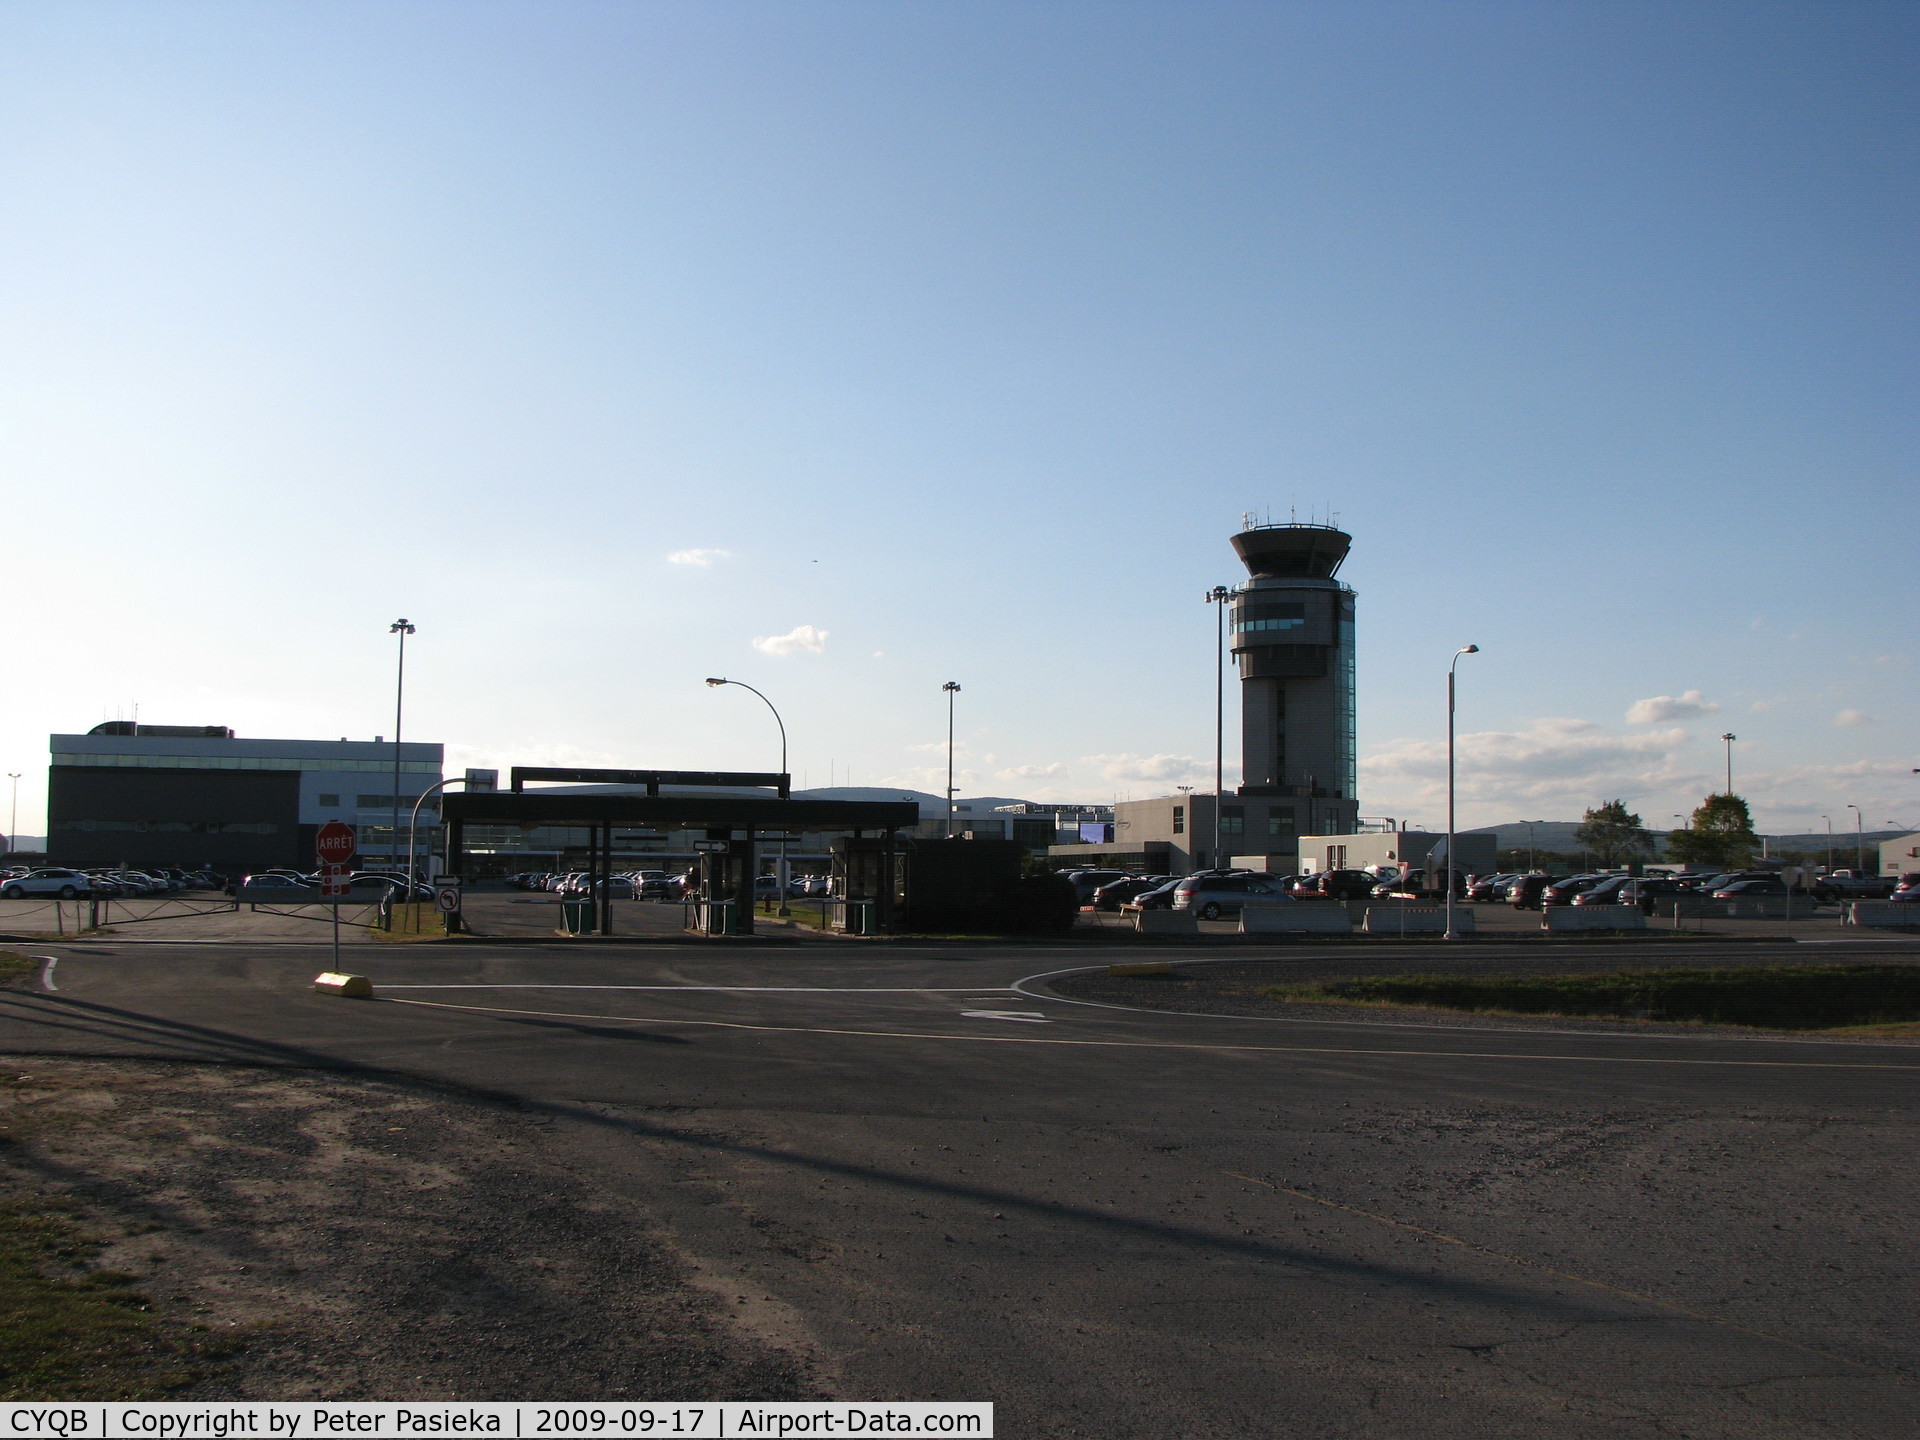 Québec/Jean Lesage International Airport (Jean Lesage International Airport), Quebec City, Quebec Canada (CYQB) - Quebec City International Airport Control Tower